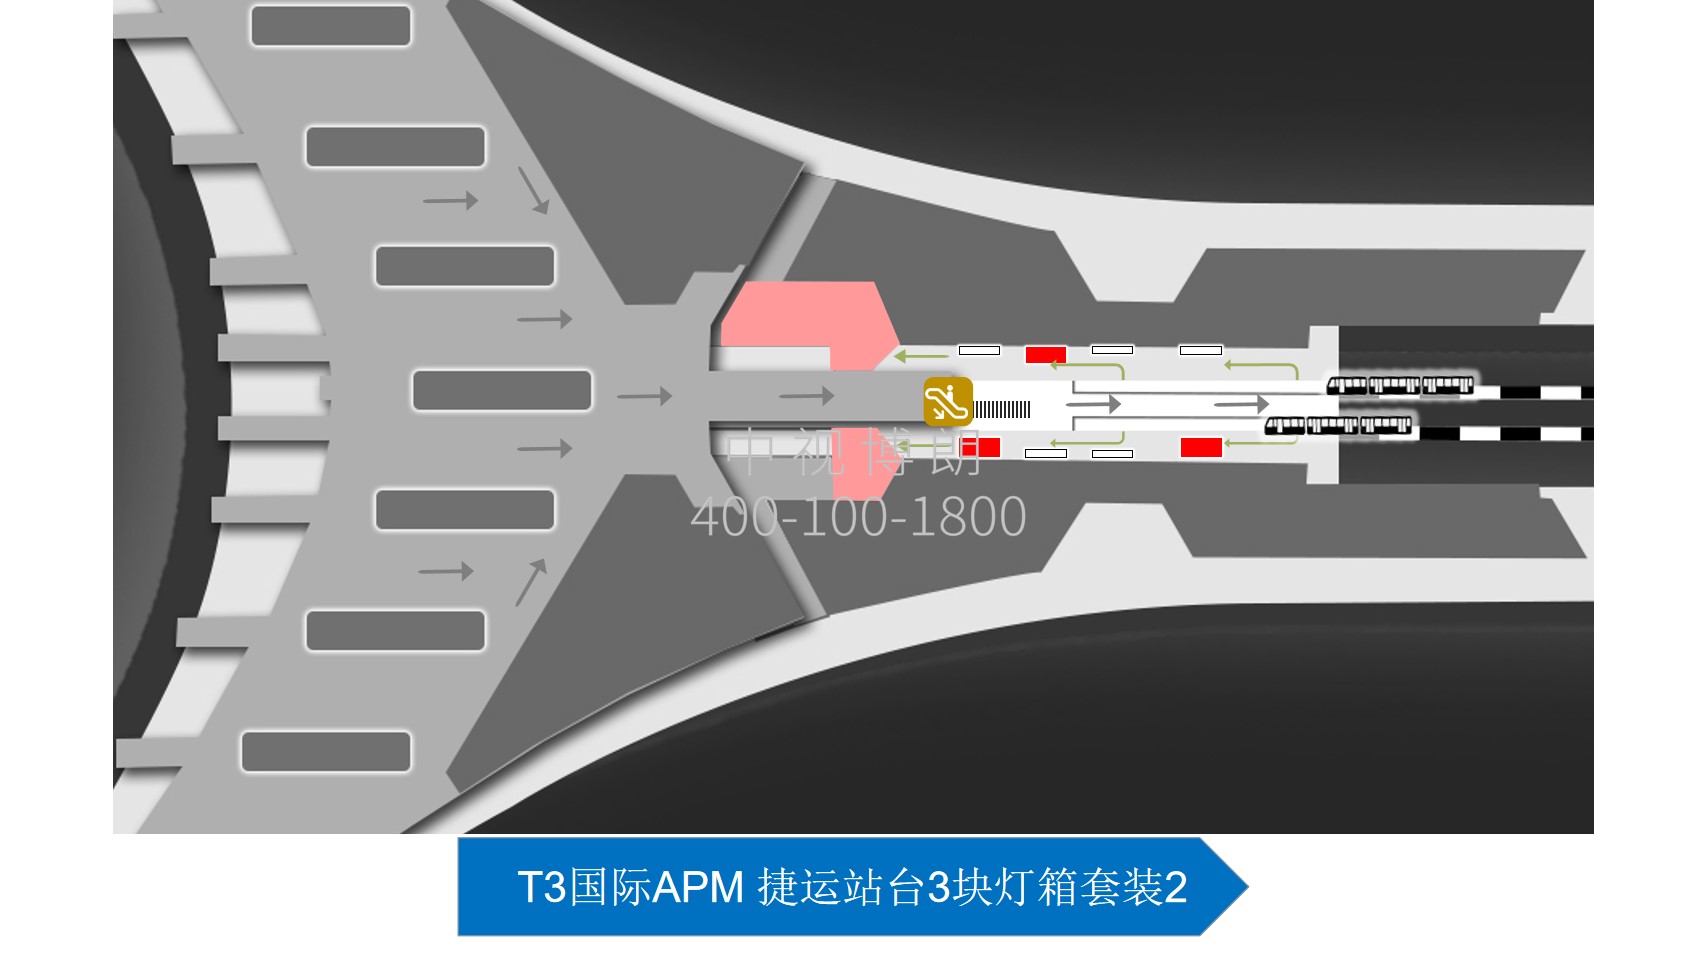 北京首都机场广告-T3 International APM Rapid Transit Platform Light Box Set 2位置图